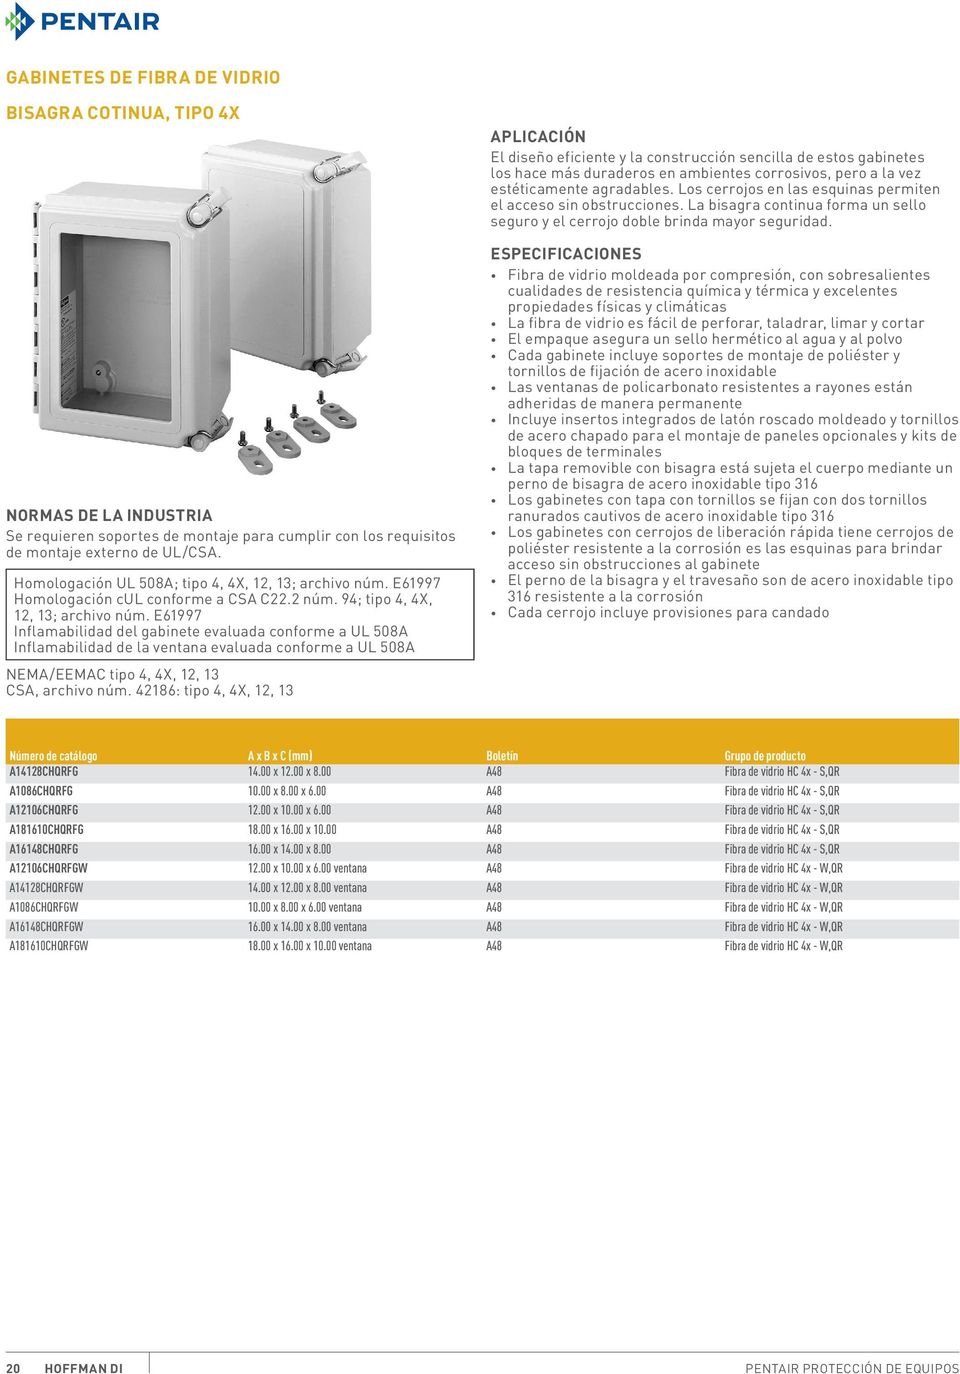 E61997 Inflamabilidad del gabinete evaluada conforme a UL 508A Inflamabilidad de la ventana evaluada conforme a UL 508A NEMA/EEMAC tipo 4, 4X, 12, 13 CSA, archivo núm.